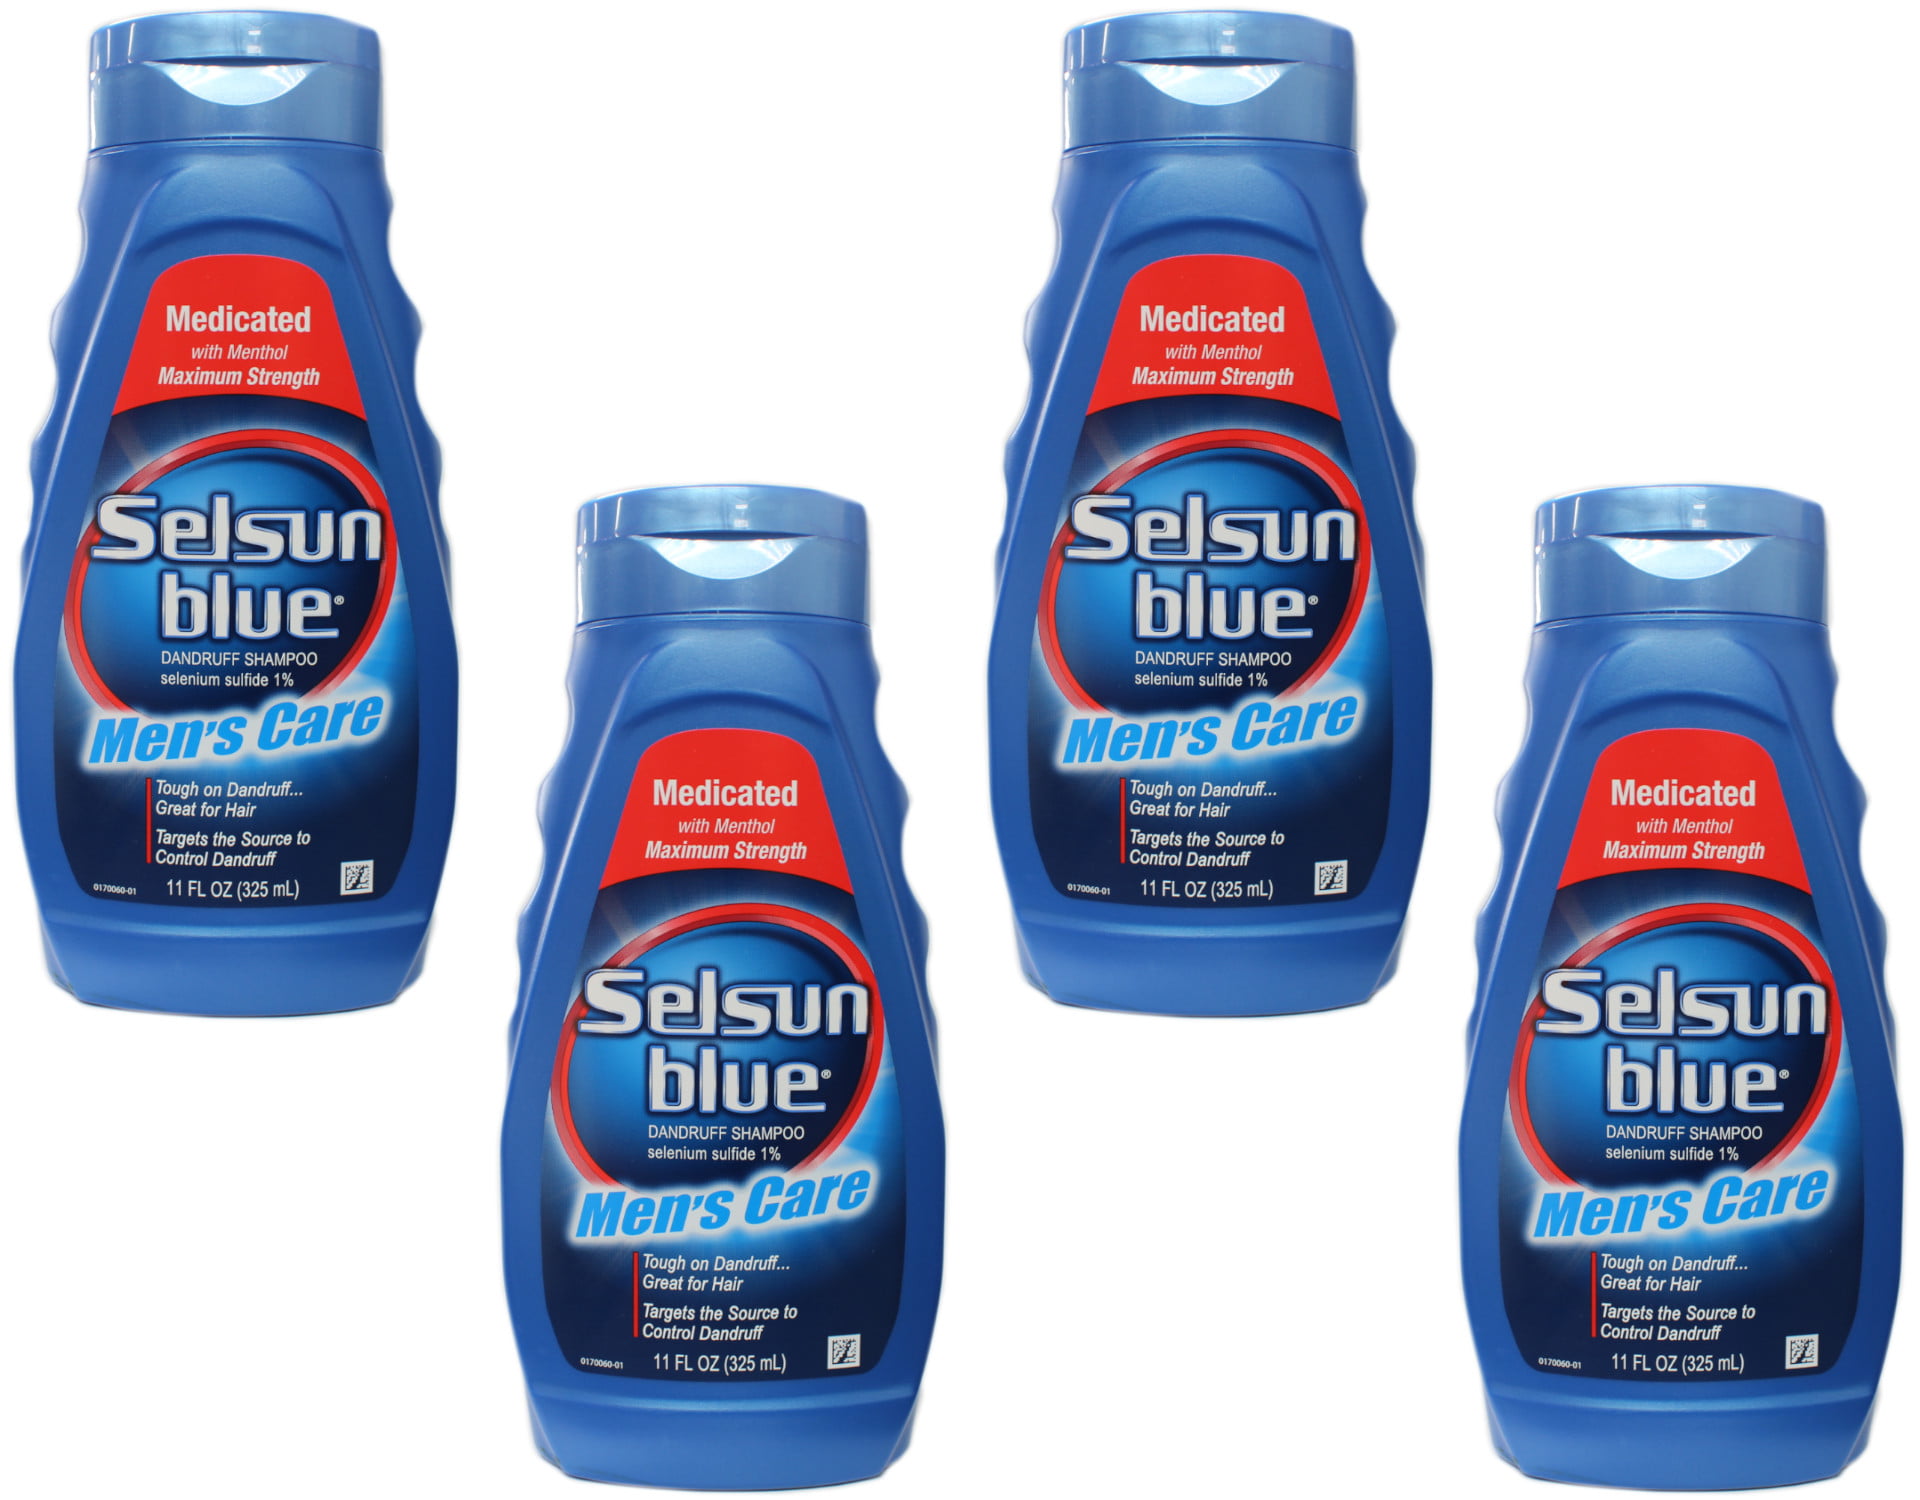 Selsun Blue Medicated Maximum Strength Dandruff Shampoo - wide 4